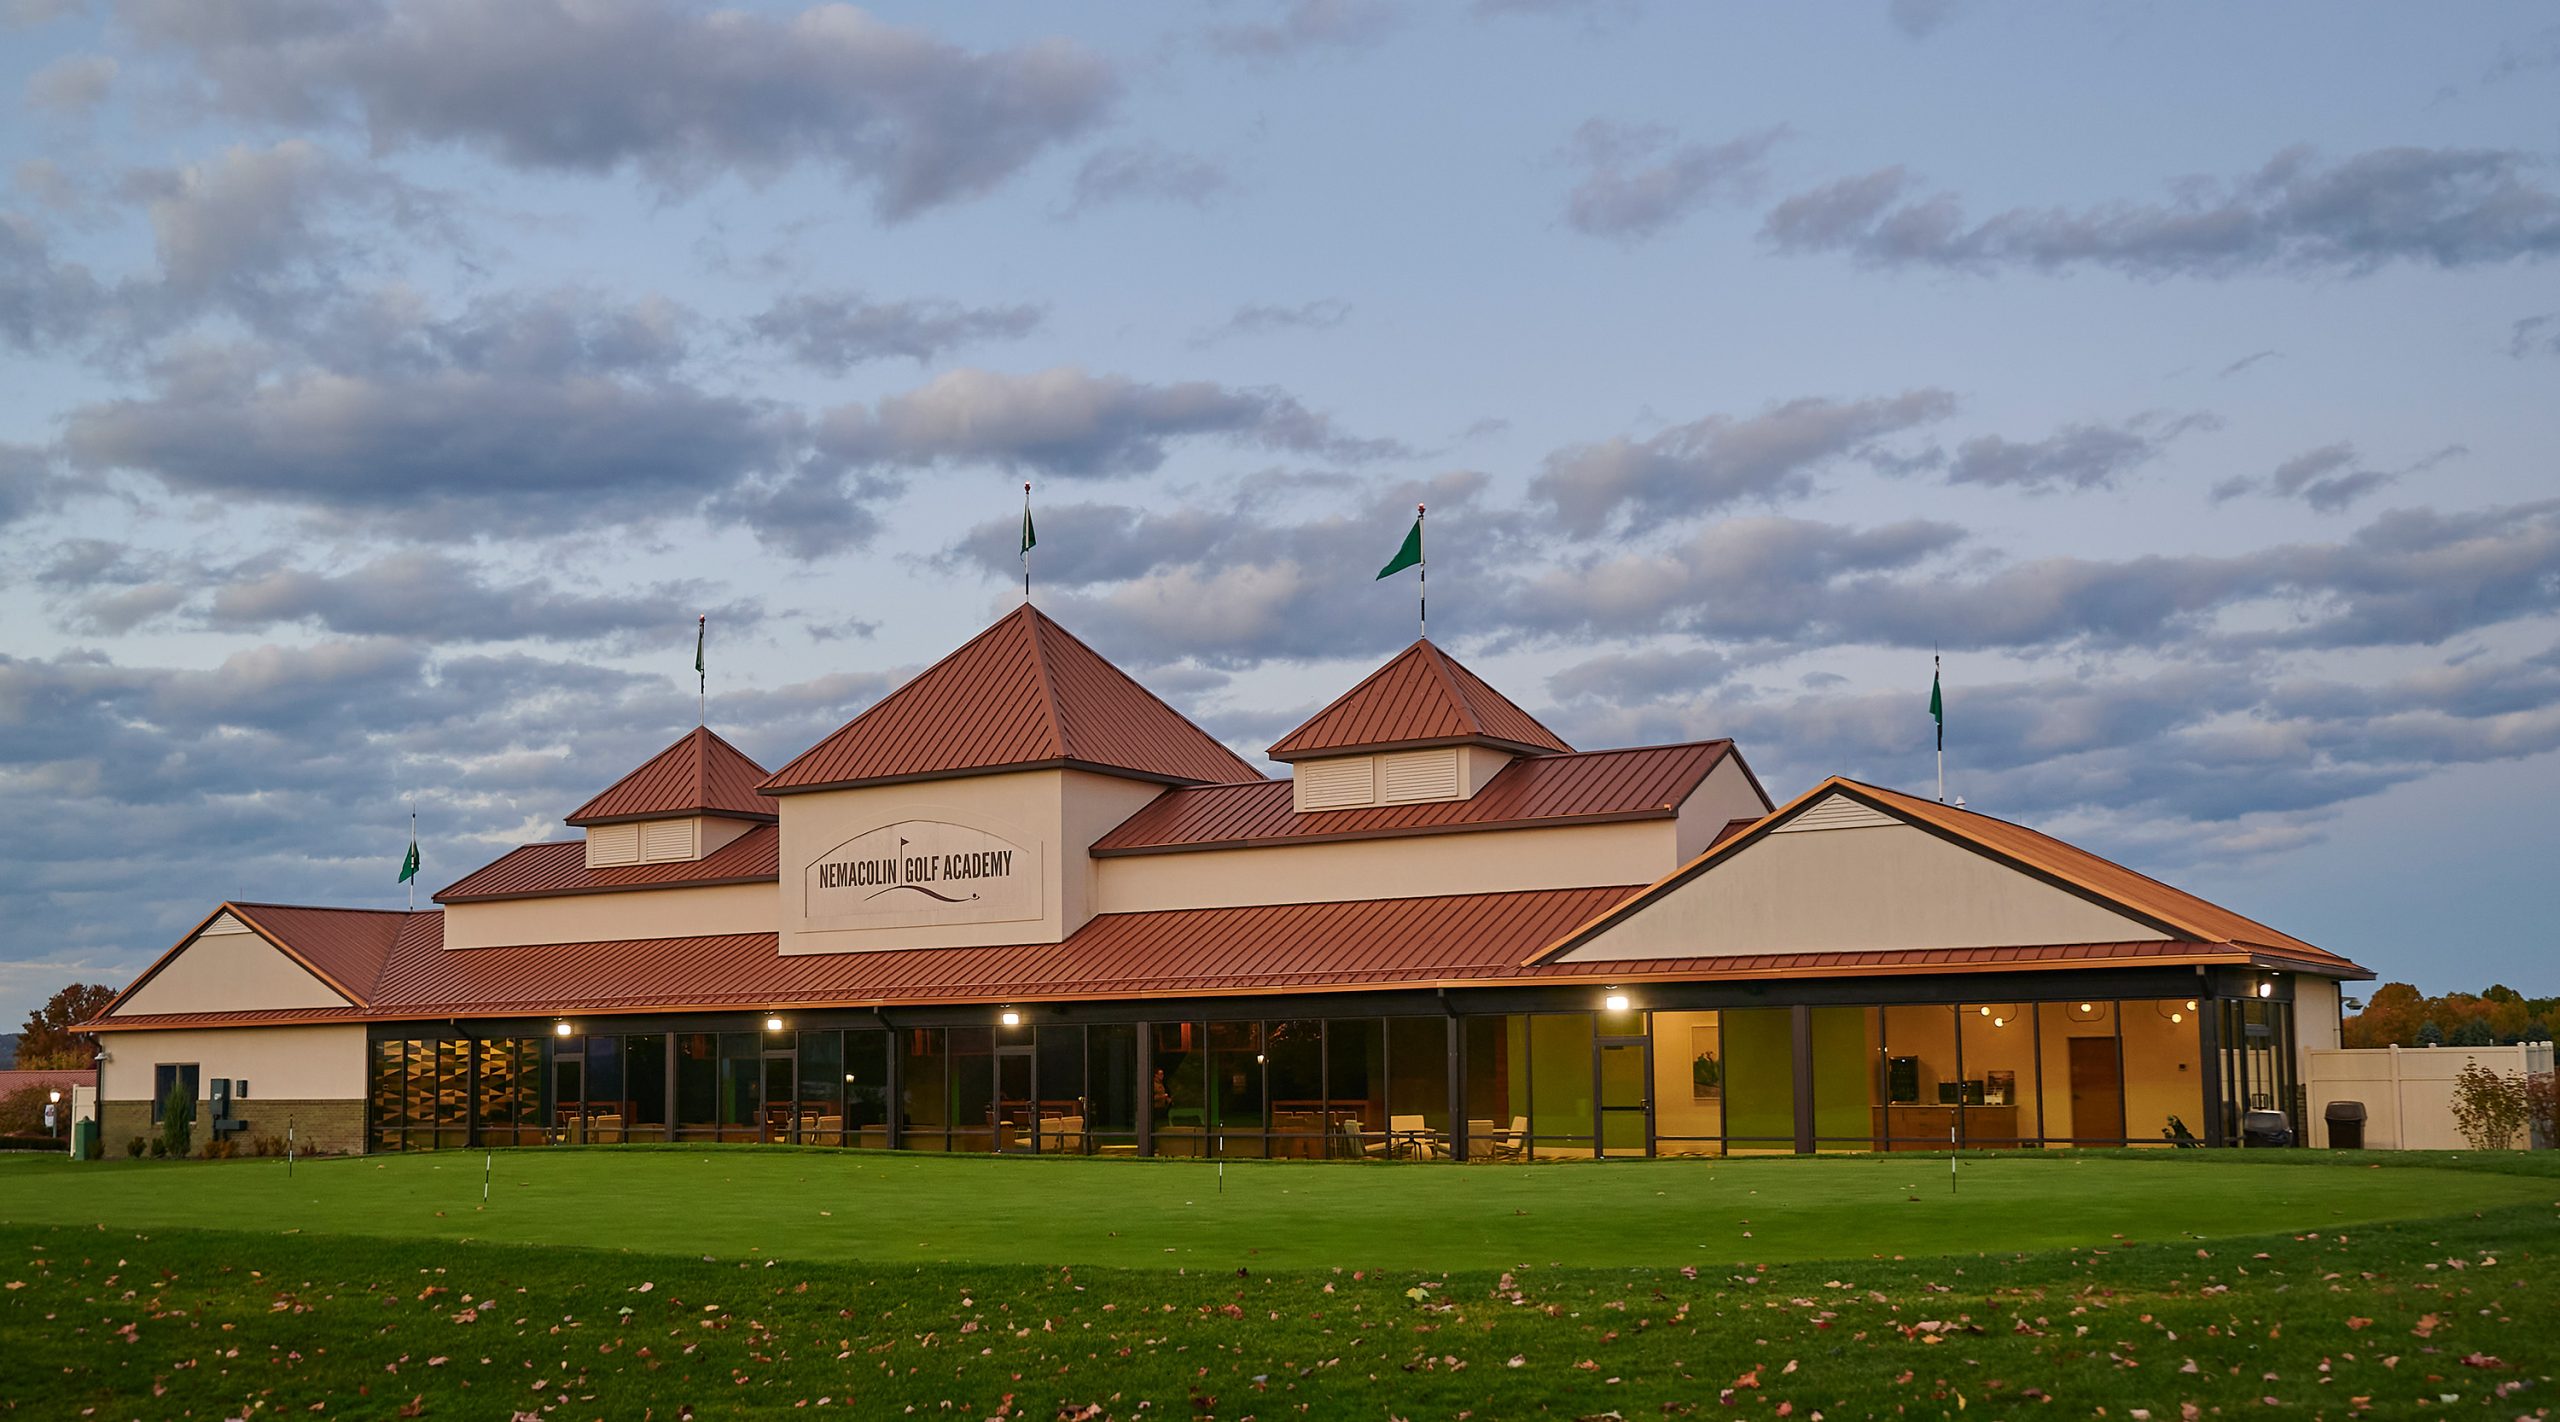 The Nemacolin Golf Academy